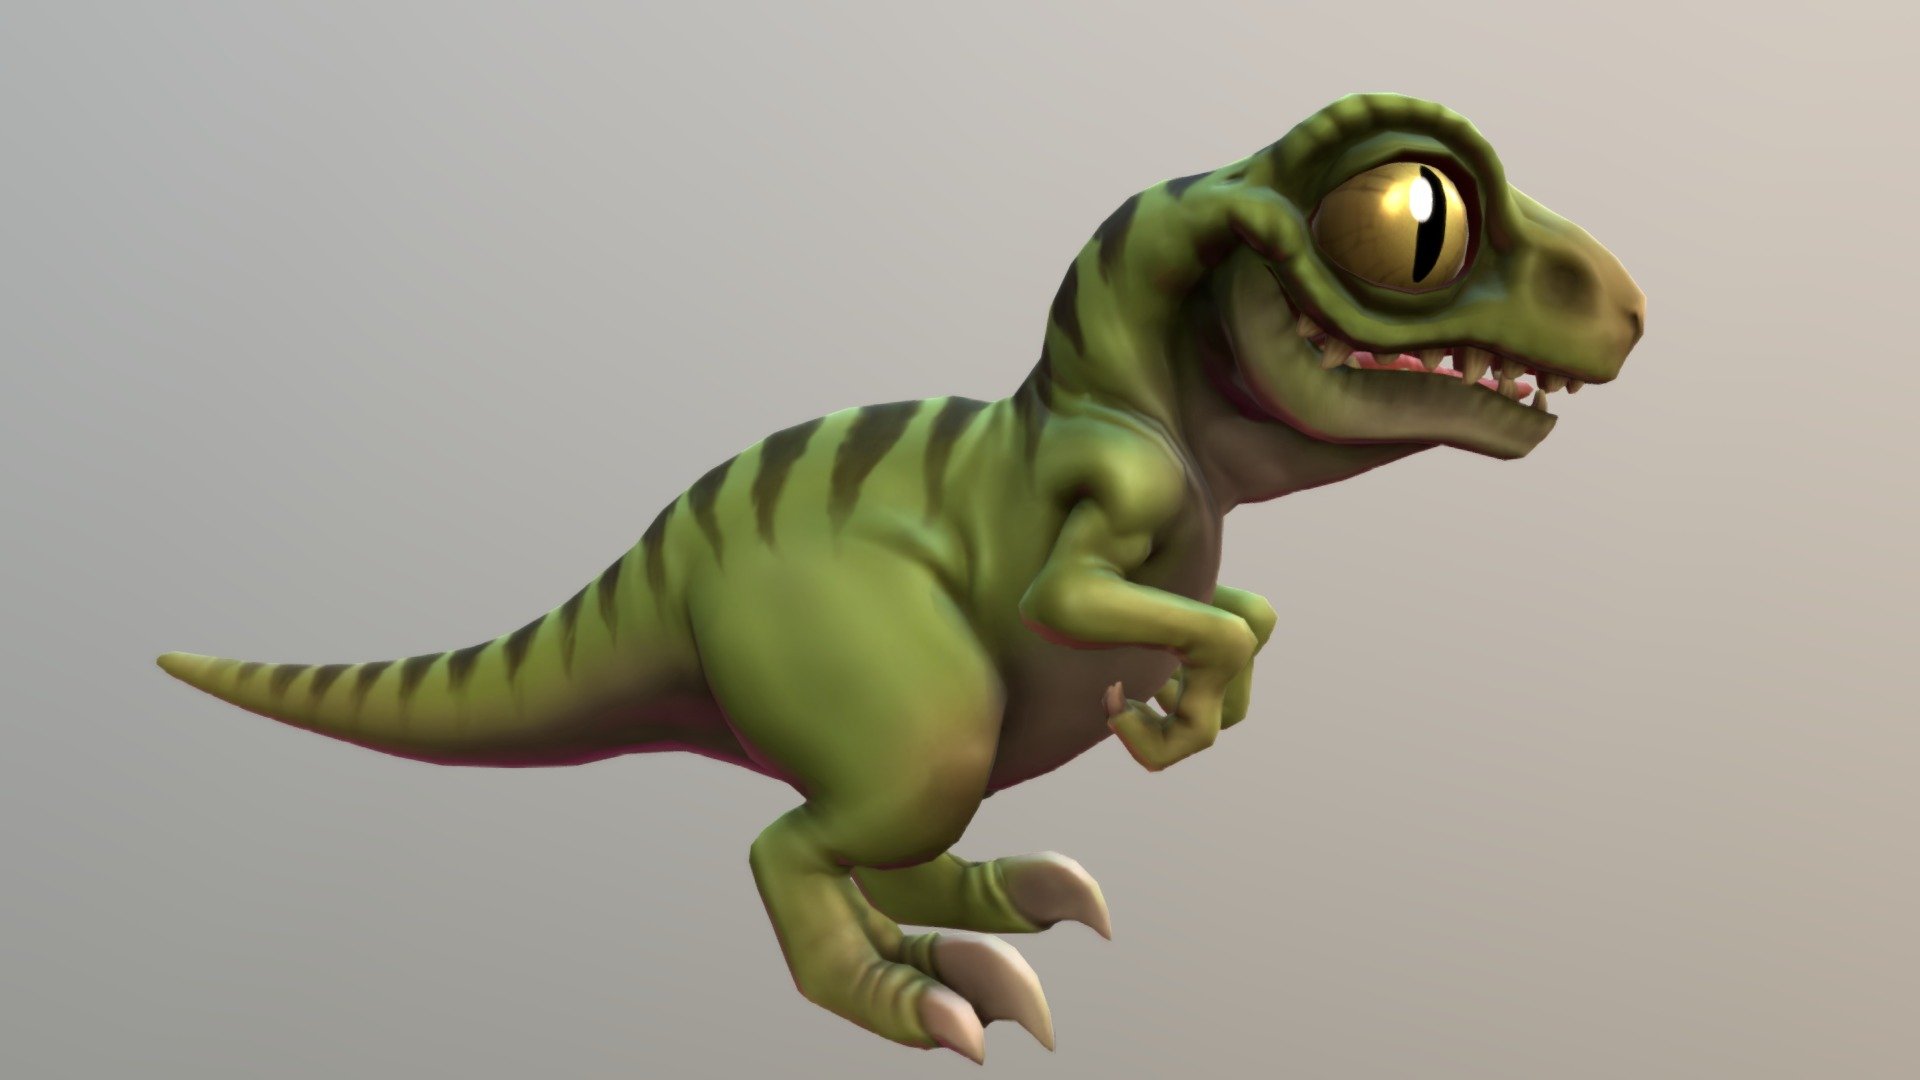 Toon Dinosaurs | 3D model